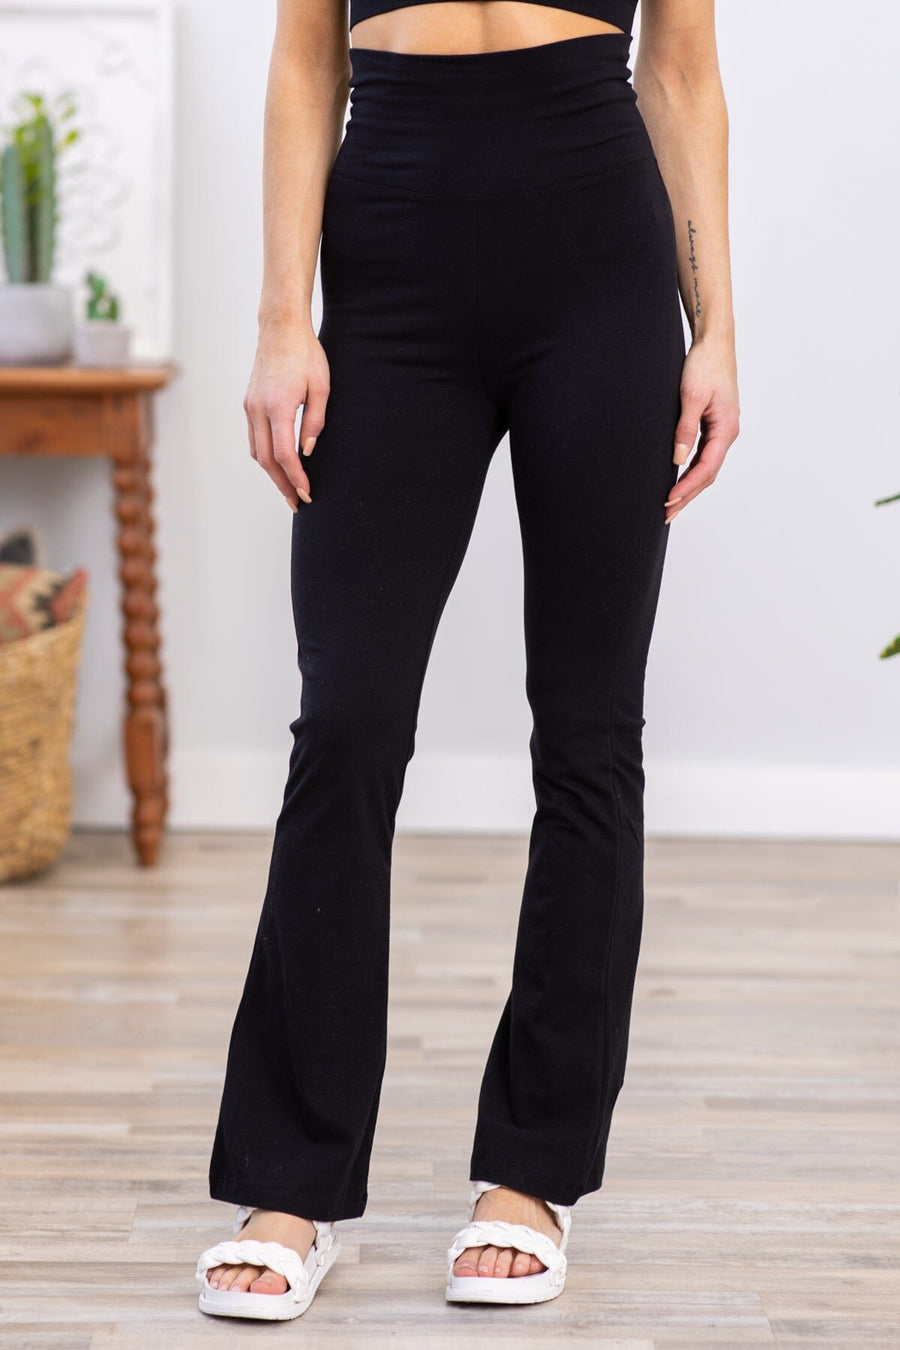 Zenana Premium Cotton FOLD Over Yoga Flare Pants, Black, Medium, Black, One  Size : : Clothing, Shoes & Accessories